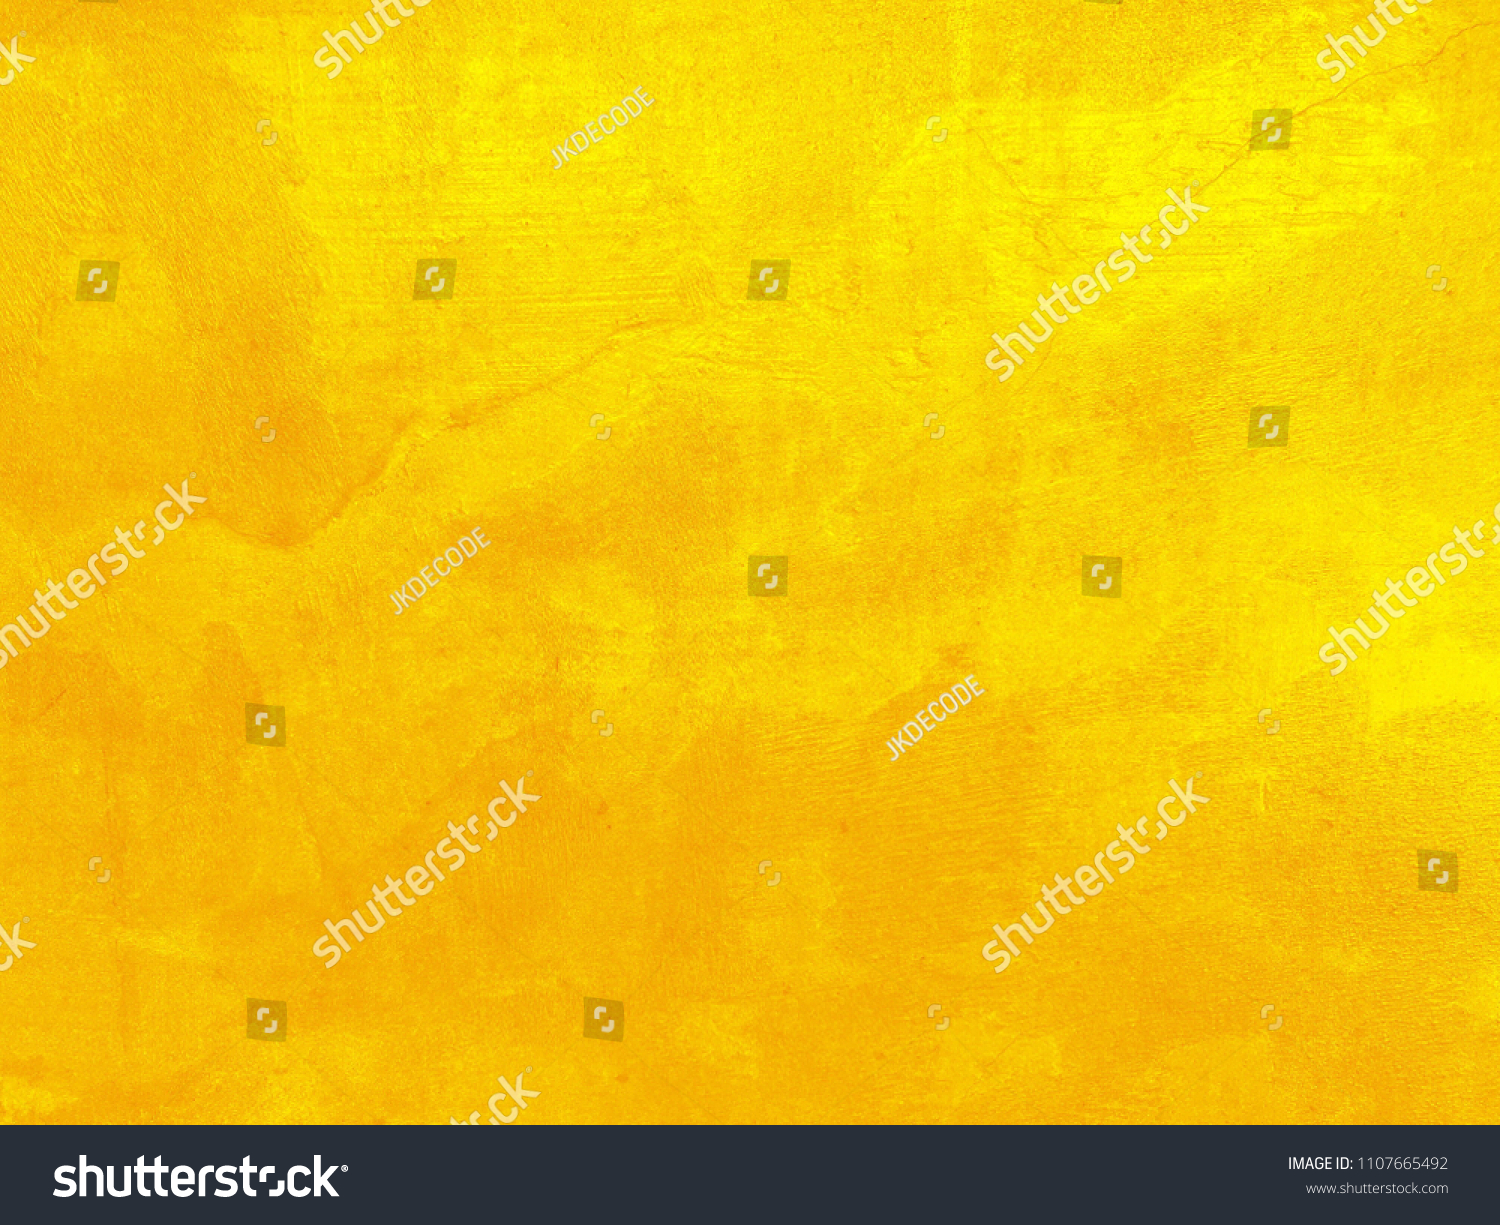 Gold or foil paper color texture background  #1107665492